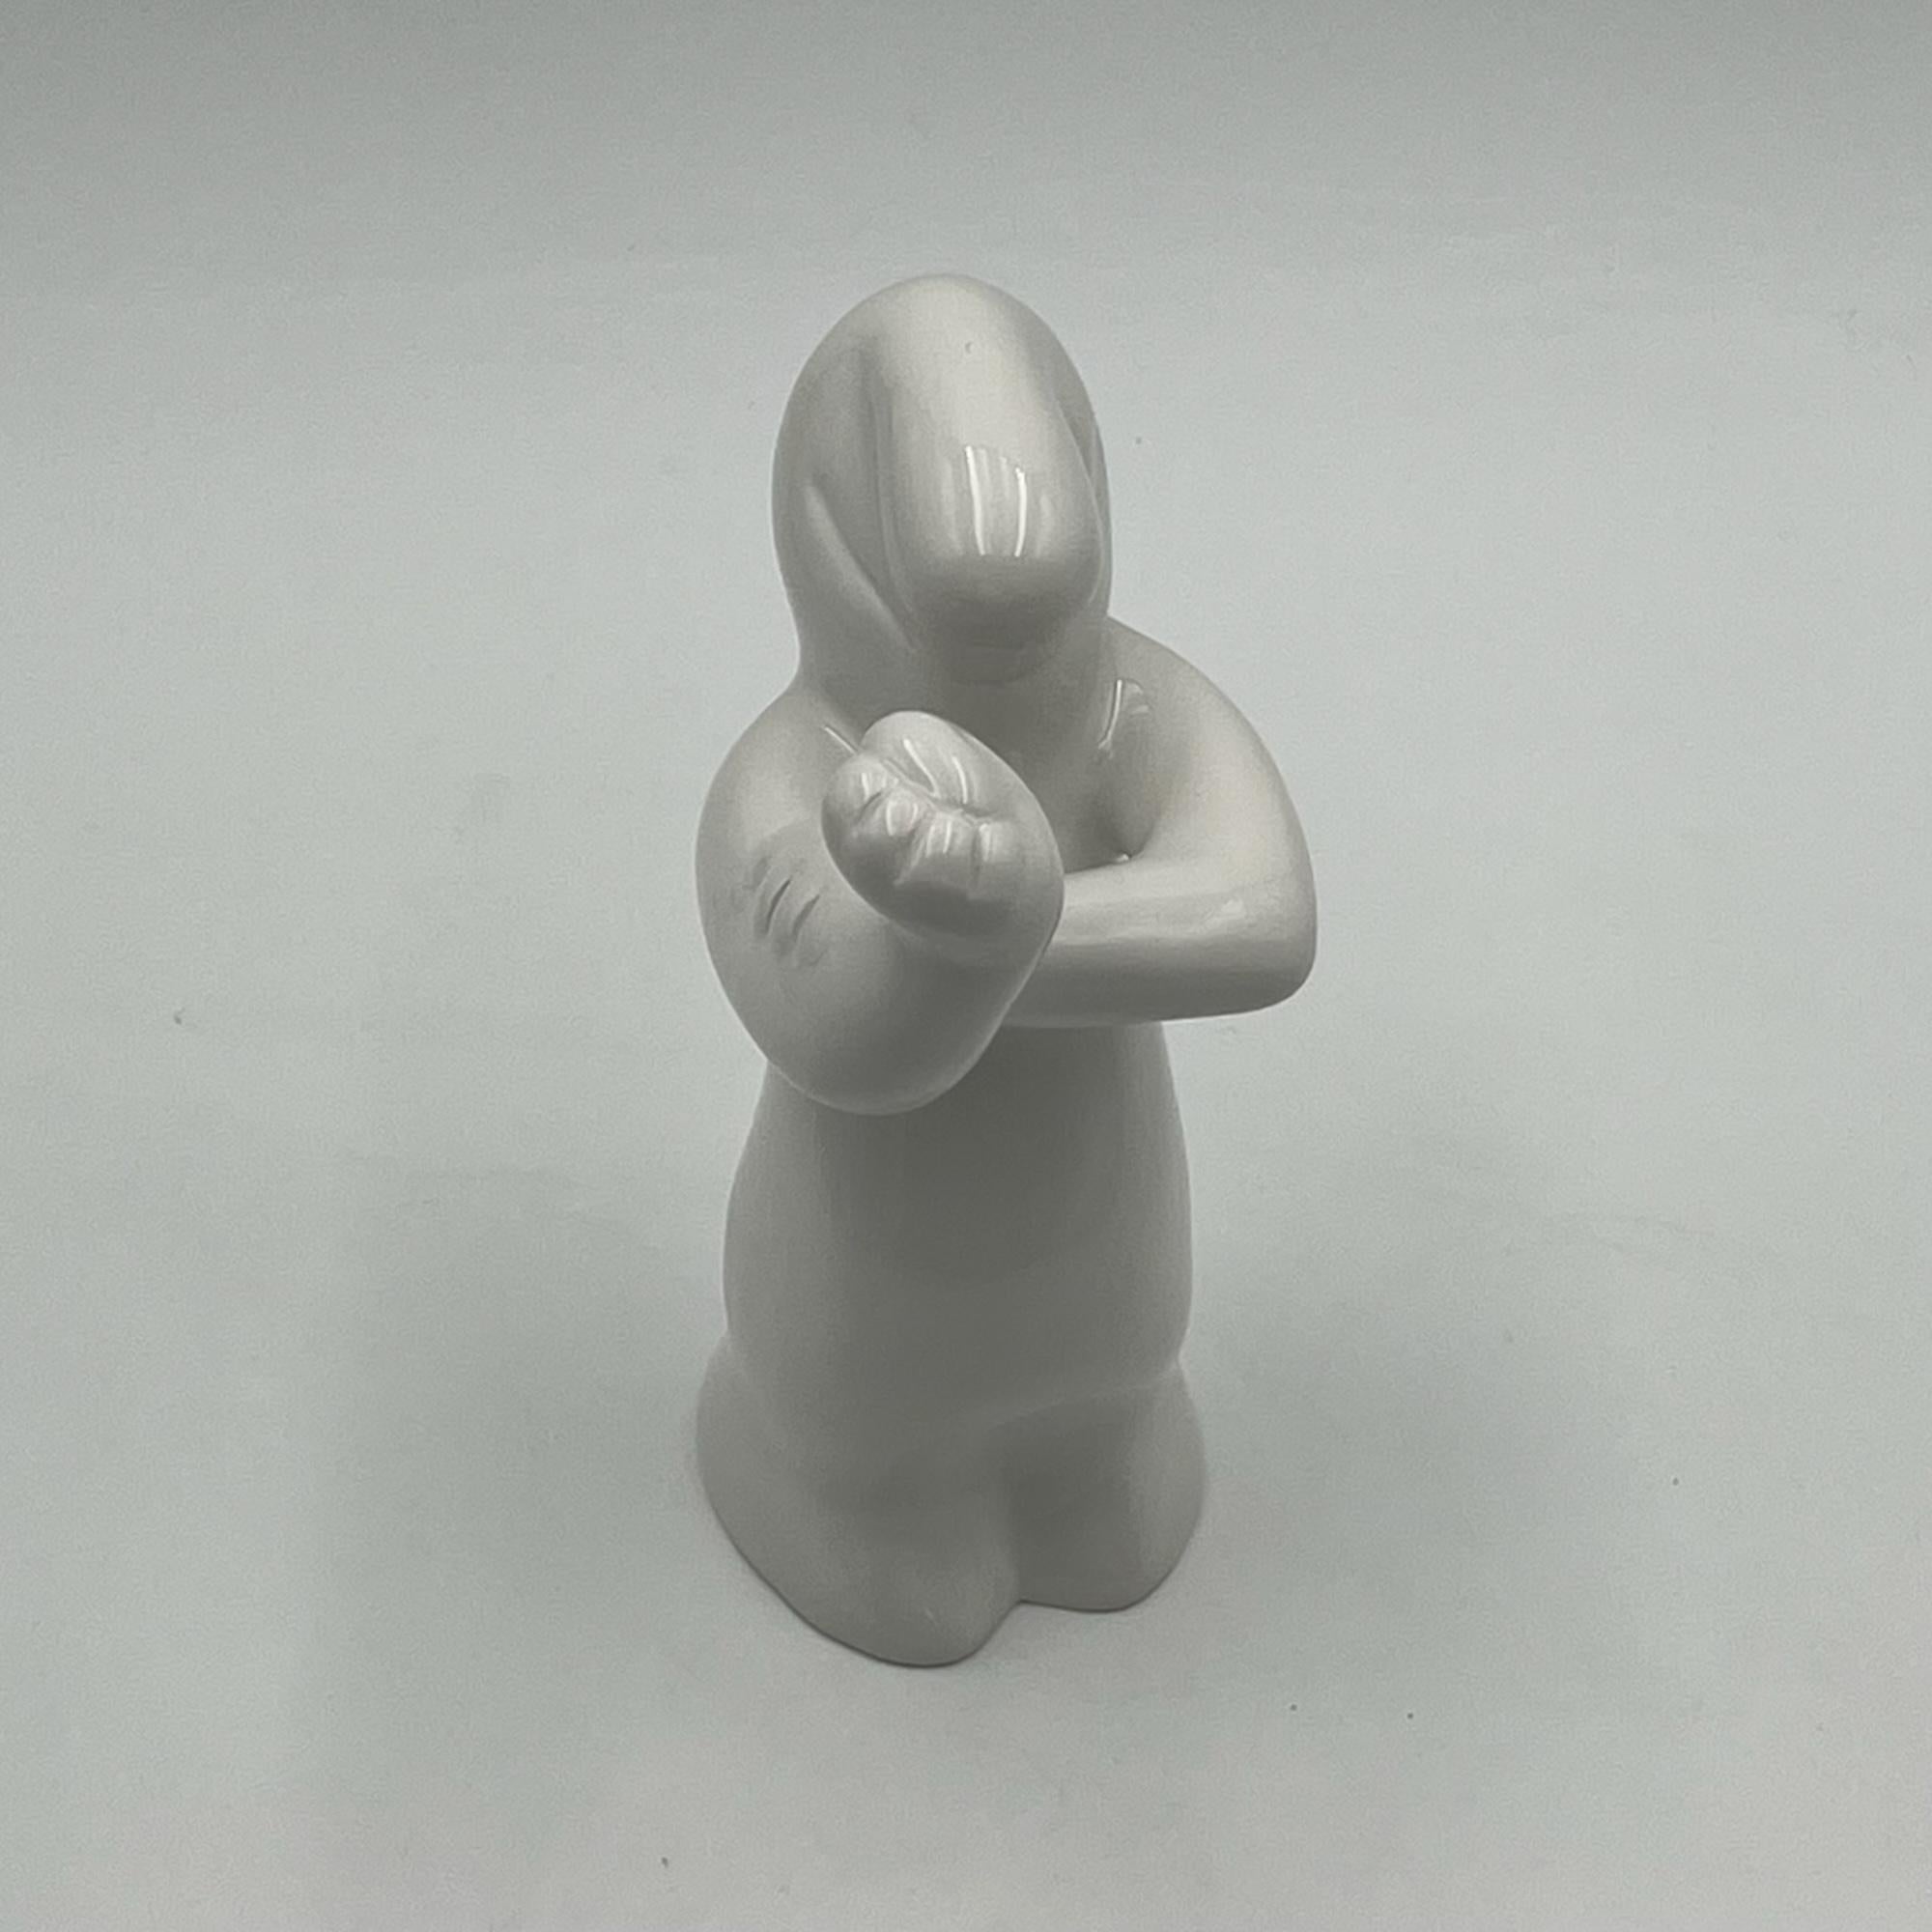 La Linea ‘Finger’ Osvaldo Cavandoli - Vintage Ceramic Figurine from the 60s 3